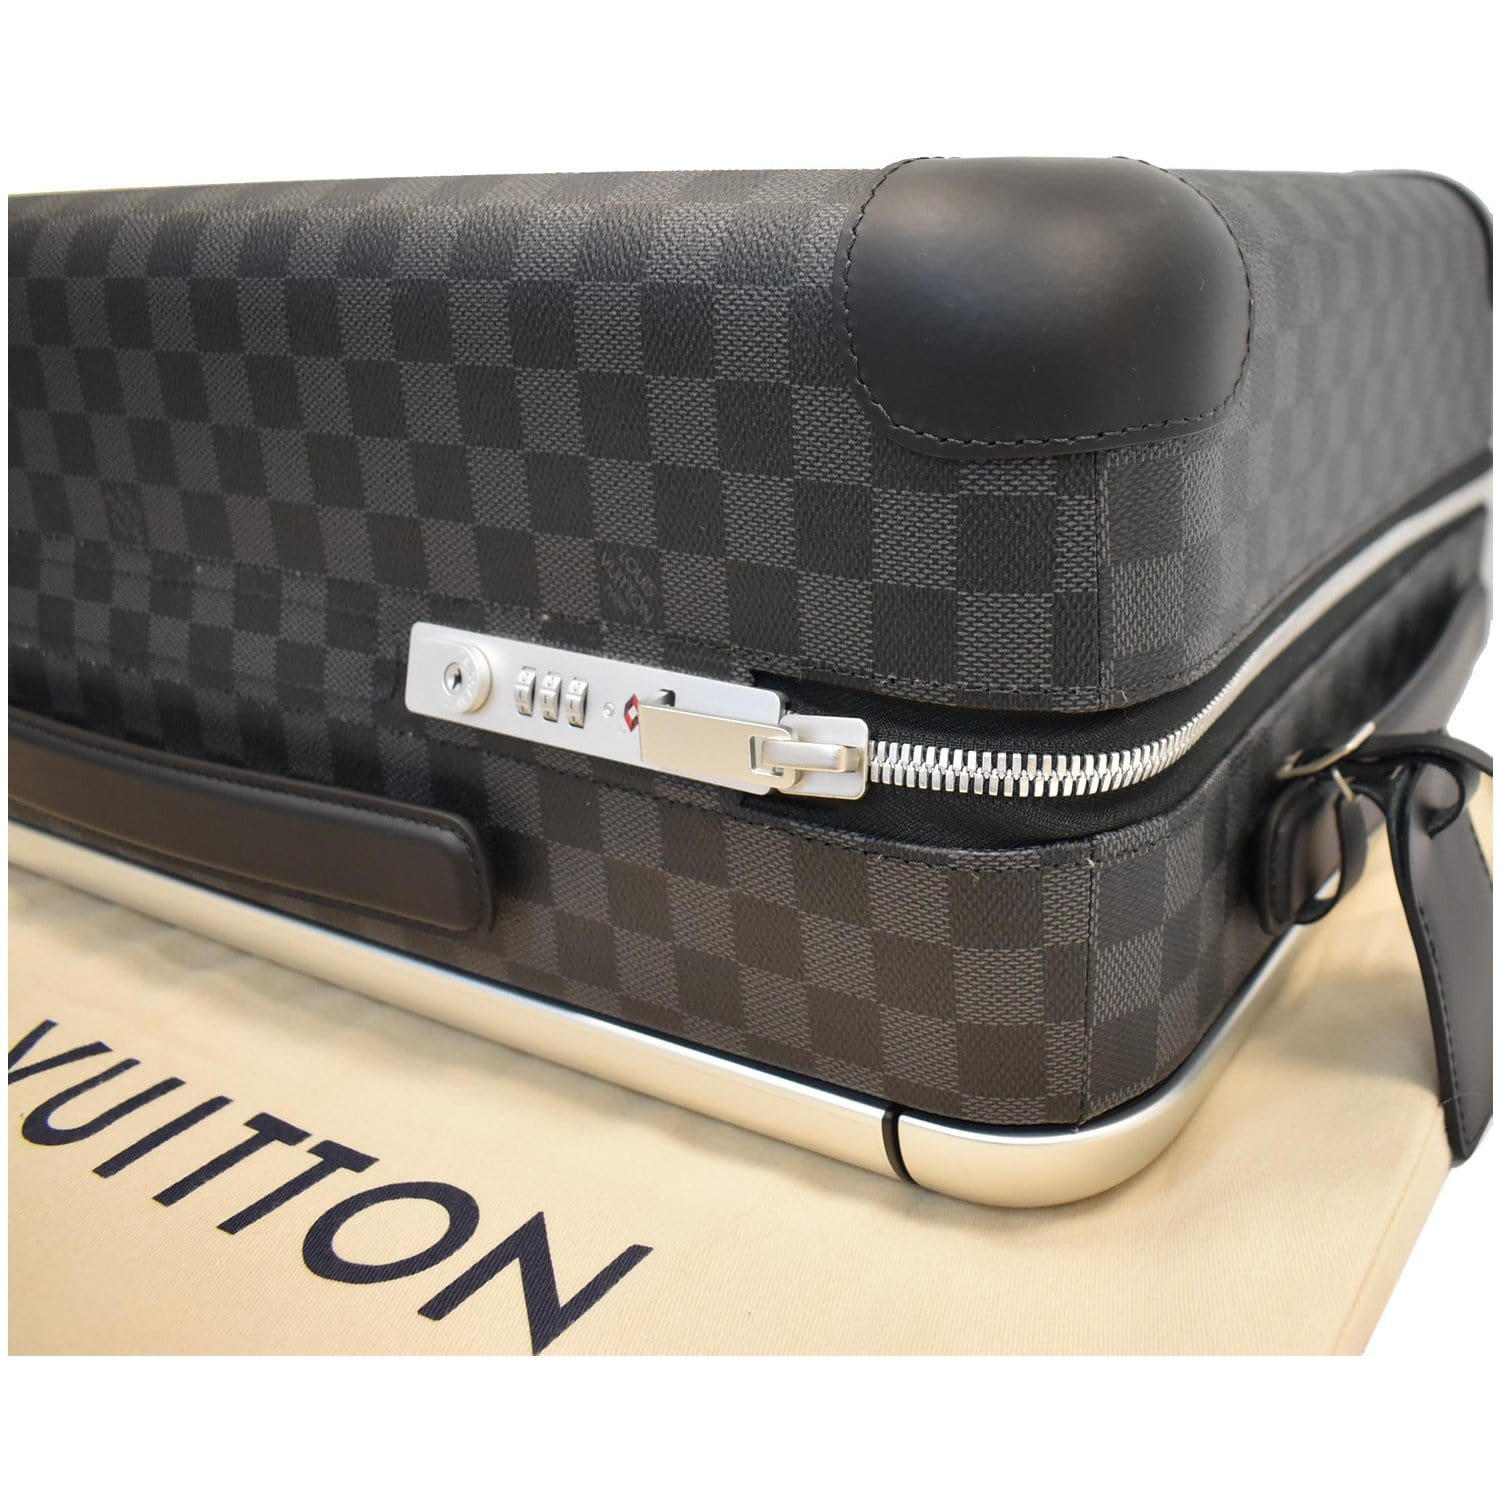 Horizon 55 leather travel bag